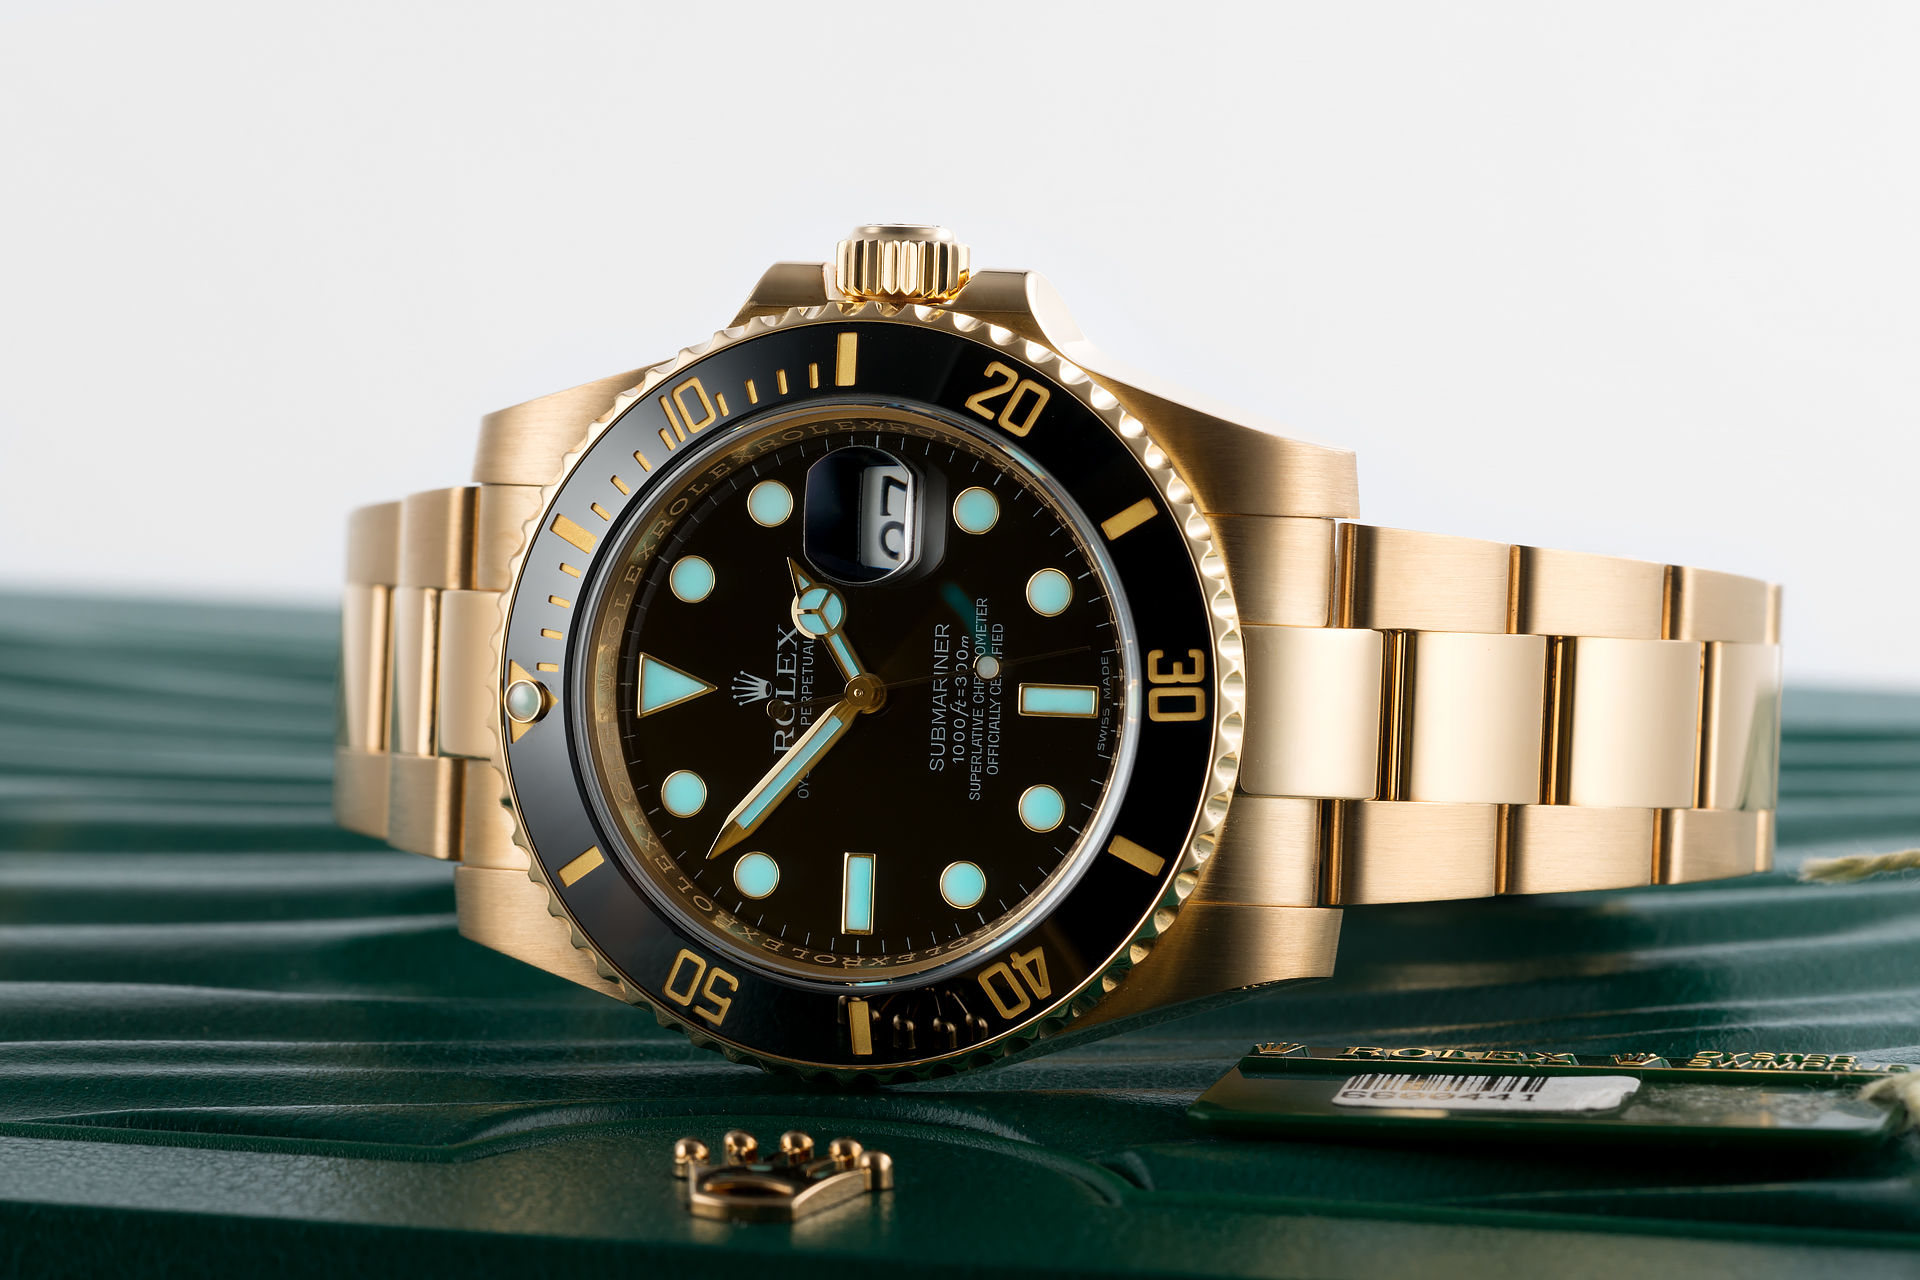 ref 116618LN | 18ct Yellow Gold | Rolex Submariner 